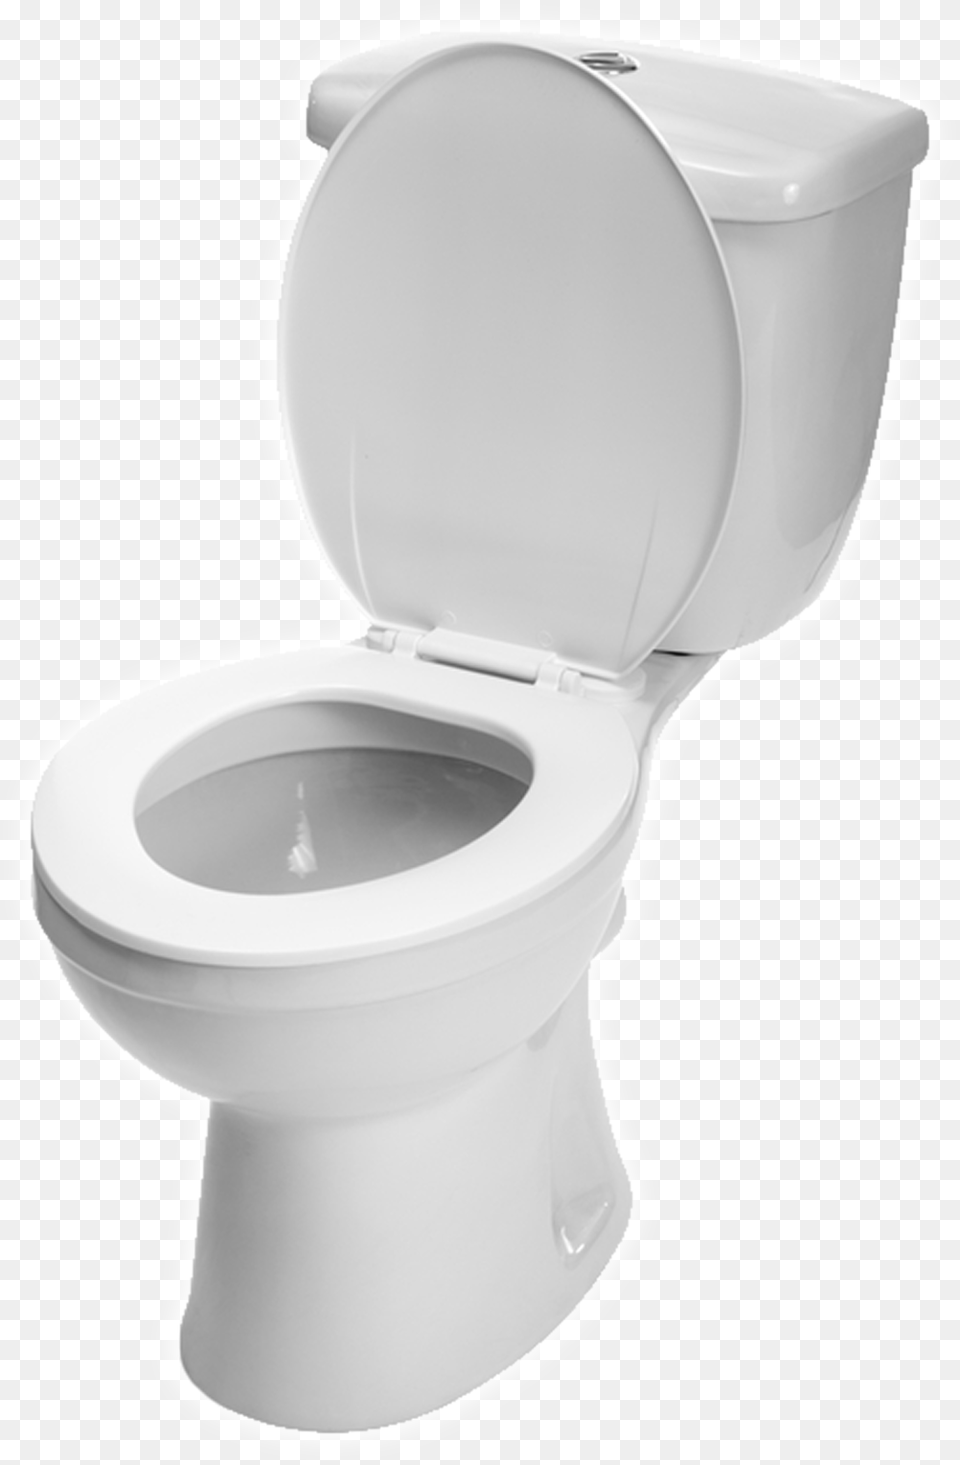 Kisspng Flush Toilet Bowl Toilet Bidet Seats Bathroom Toilet Bowl Transparent Background, Indoors, Room, Potty Free Png